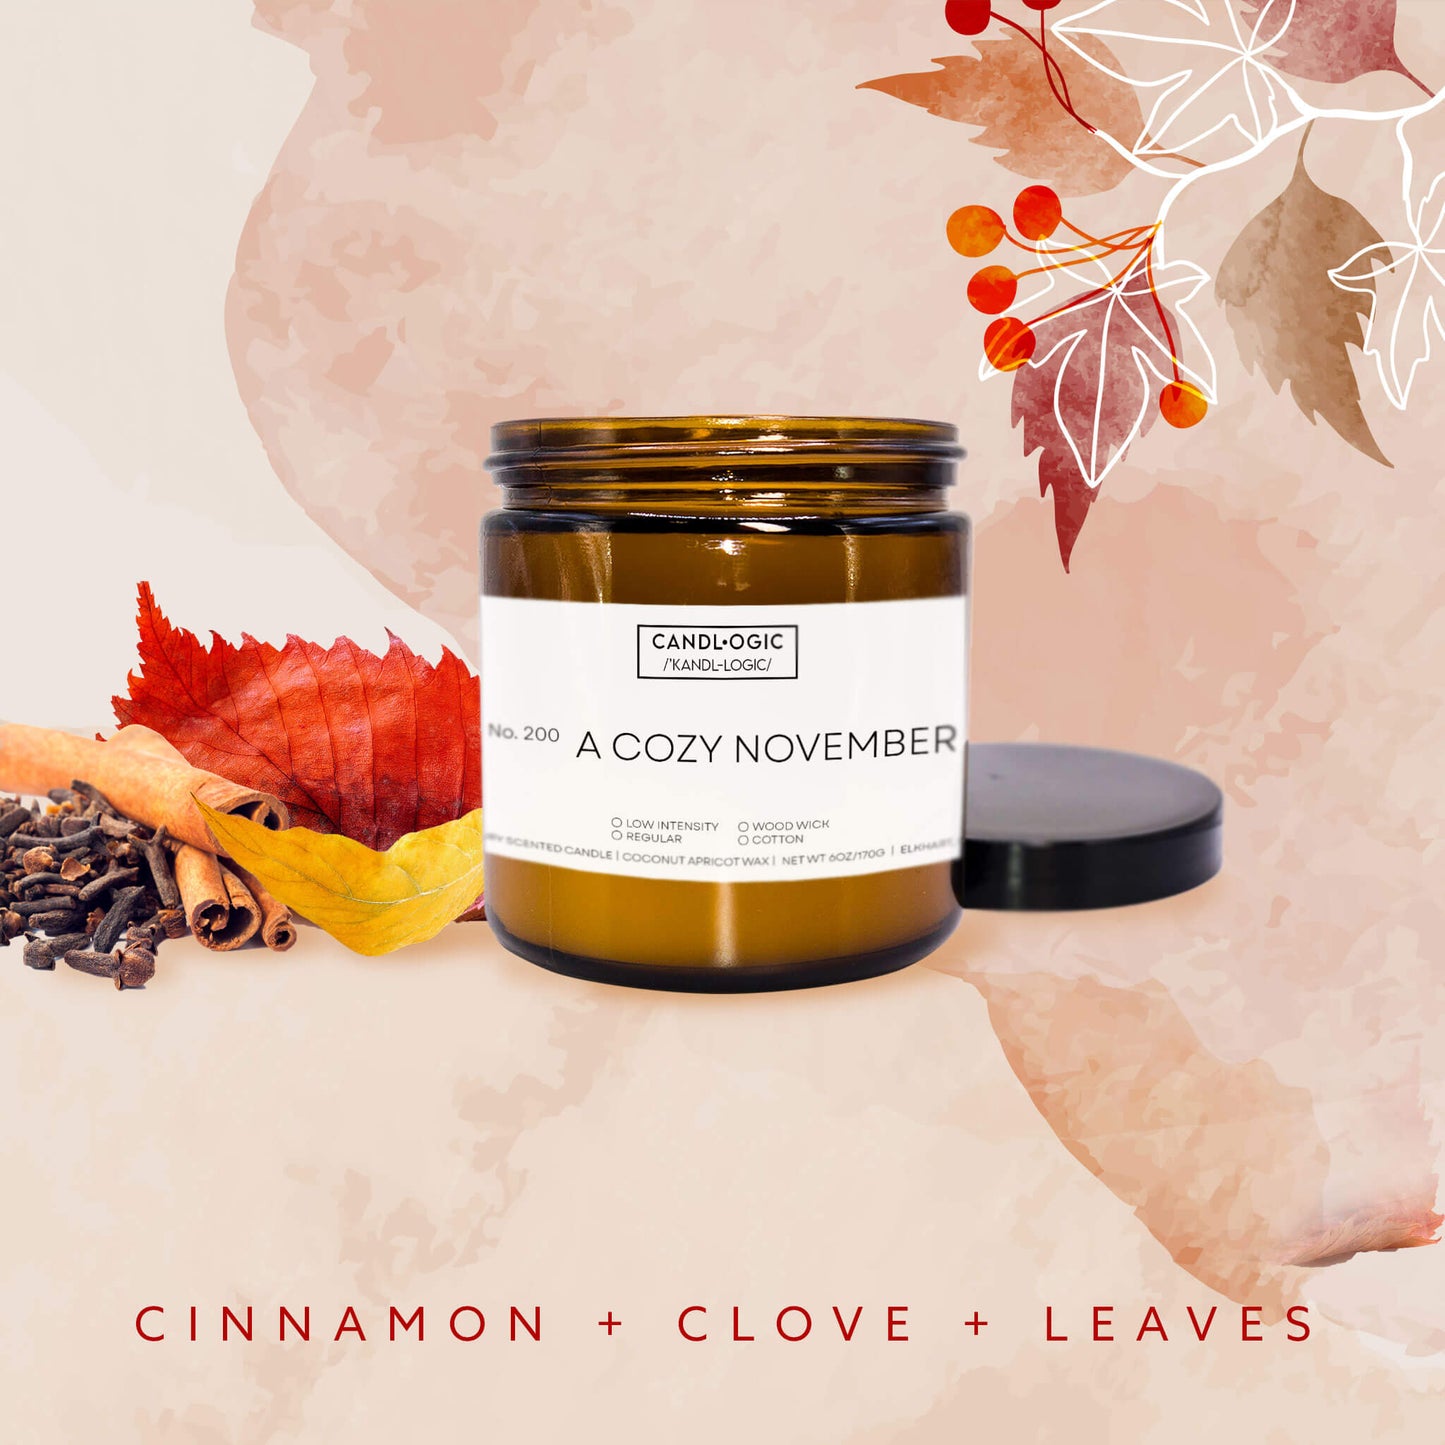 No. 200 A Cozy November candle - Cinnamon, Clove & Leaves